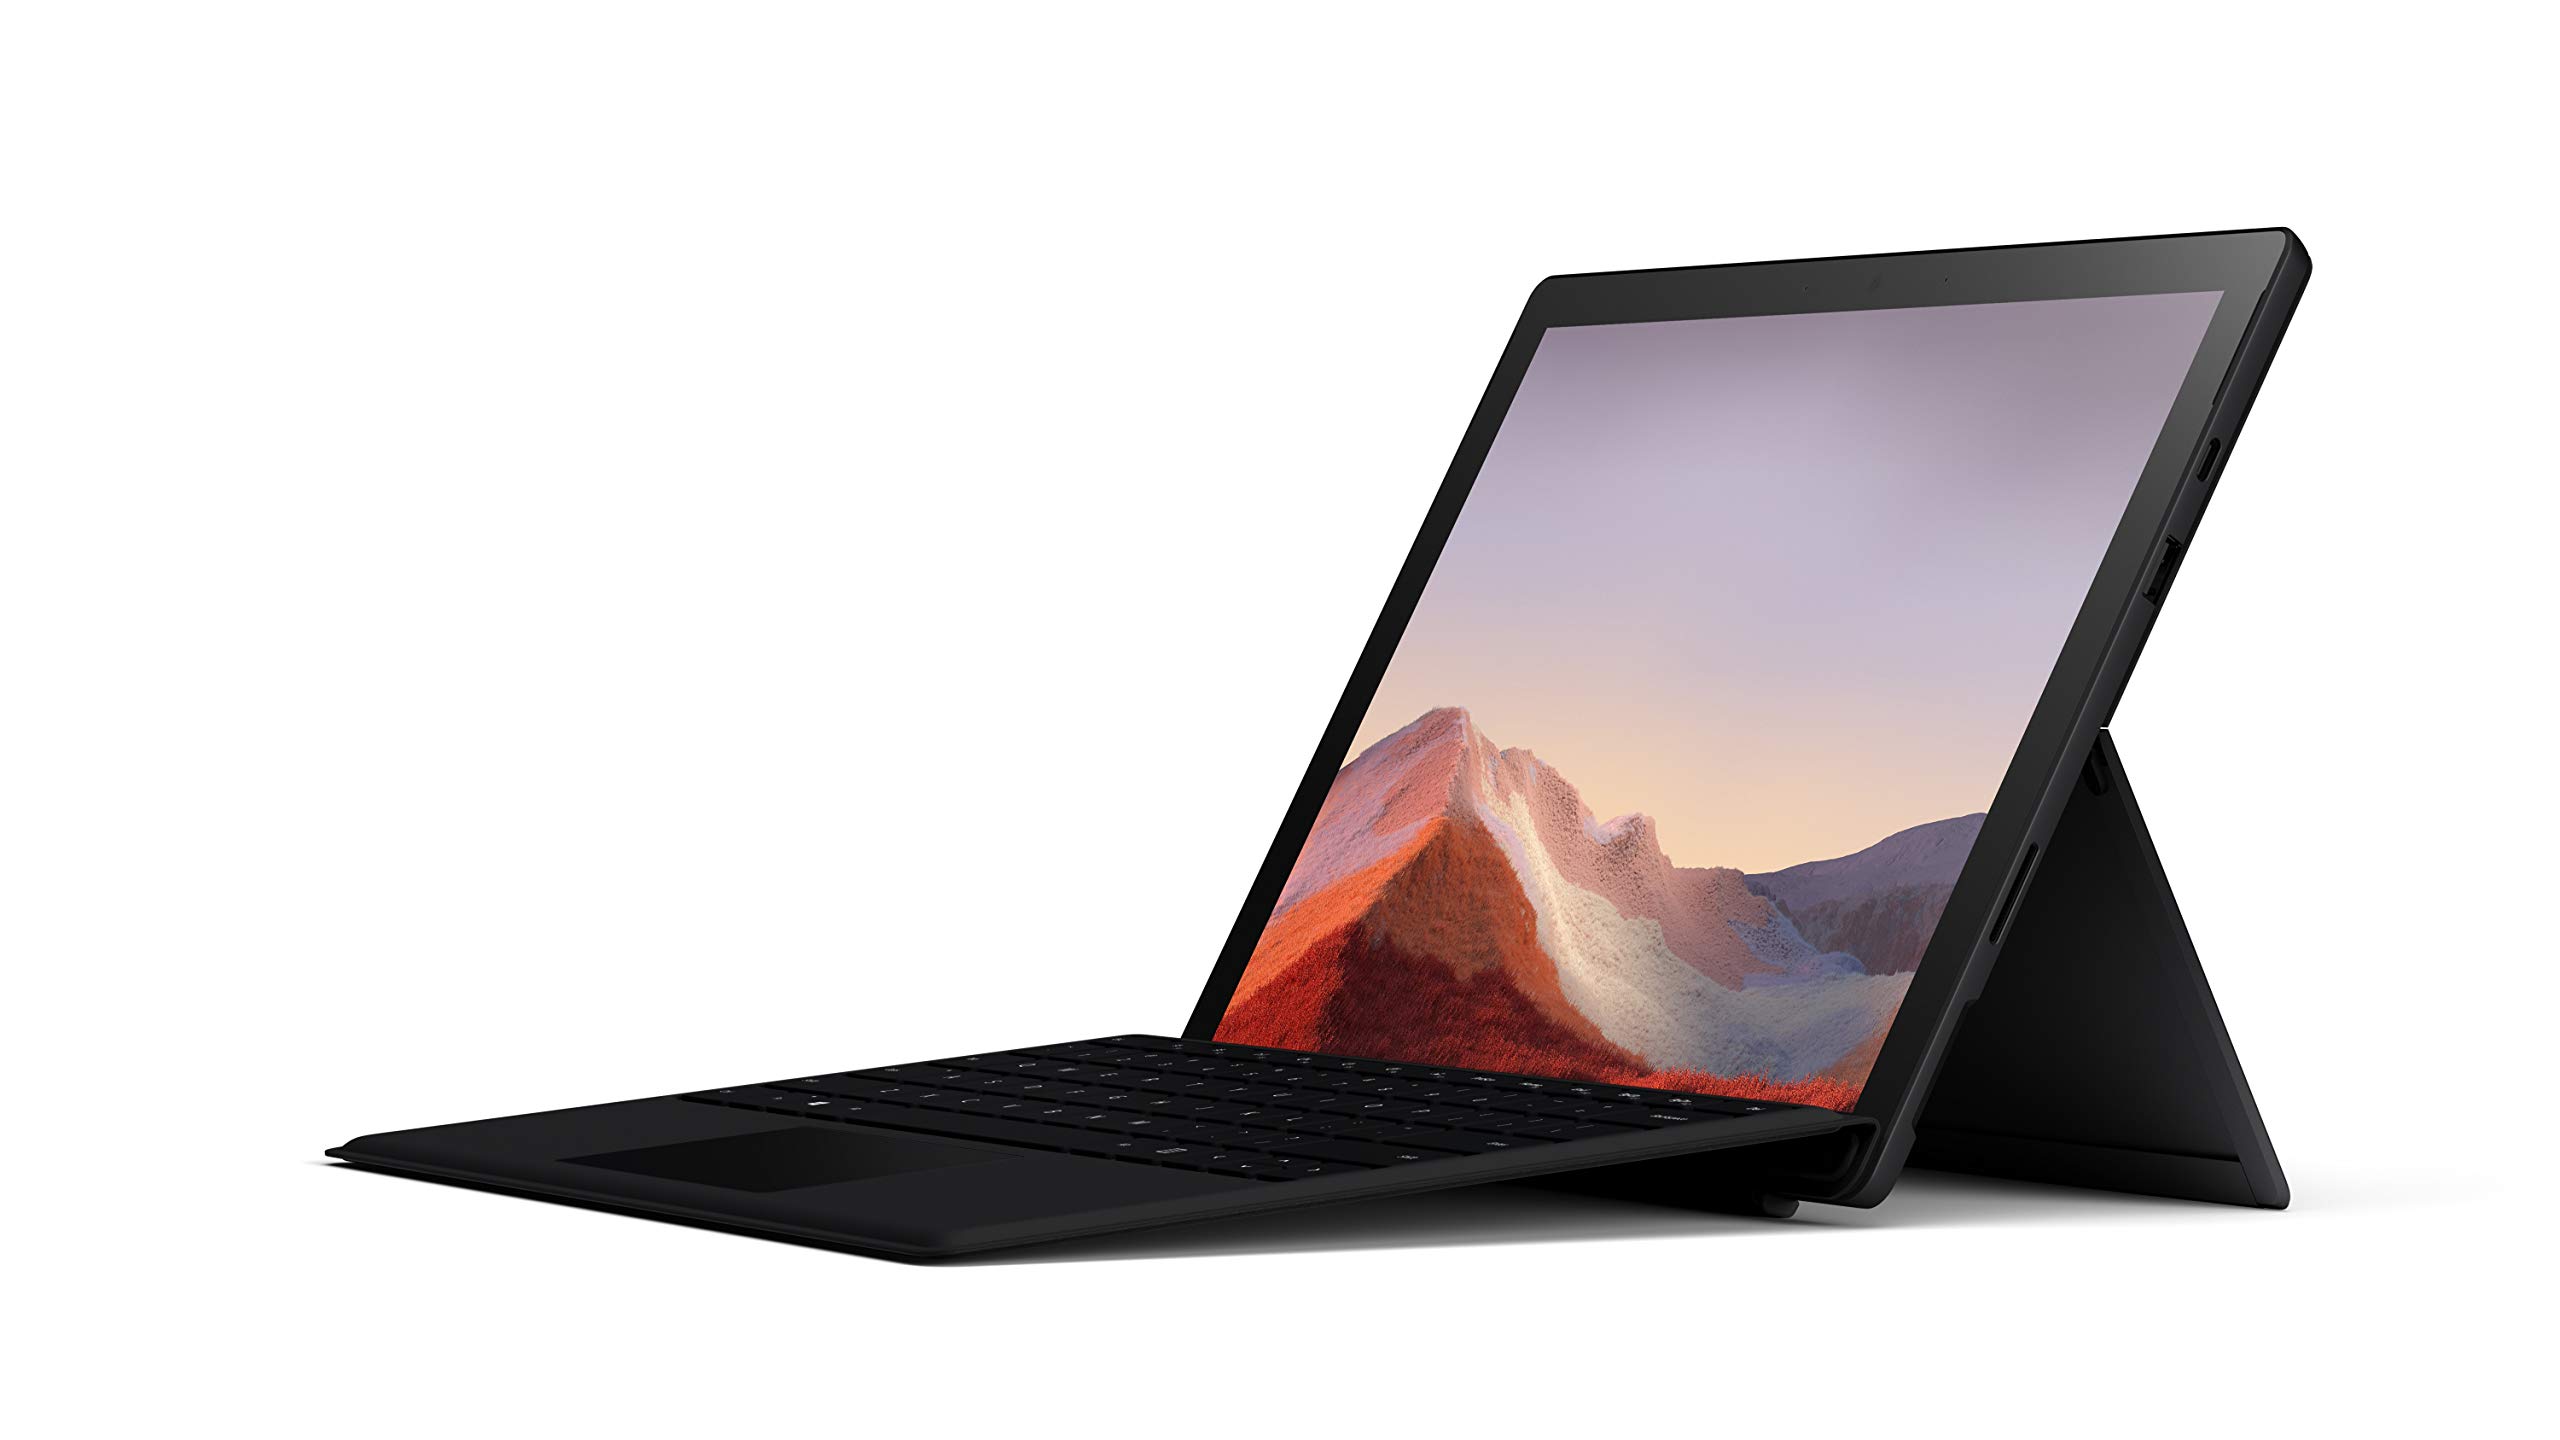 Microsoft Surface Pro 7 12.3 英寸触摸屏 - 第 10 代英特尔酷睿 i7 - 16GB 内存 - 256GB SSD 哑光黑色，带黑色键盘盖